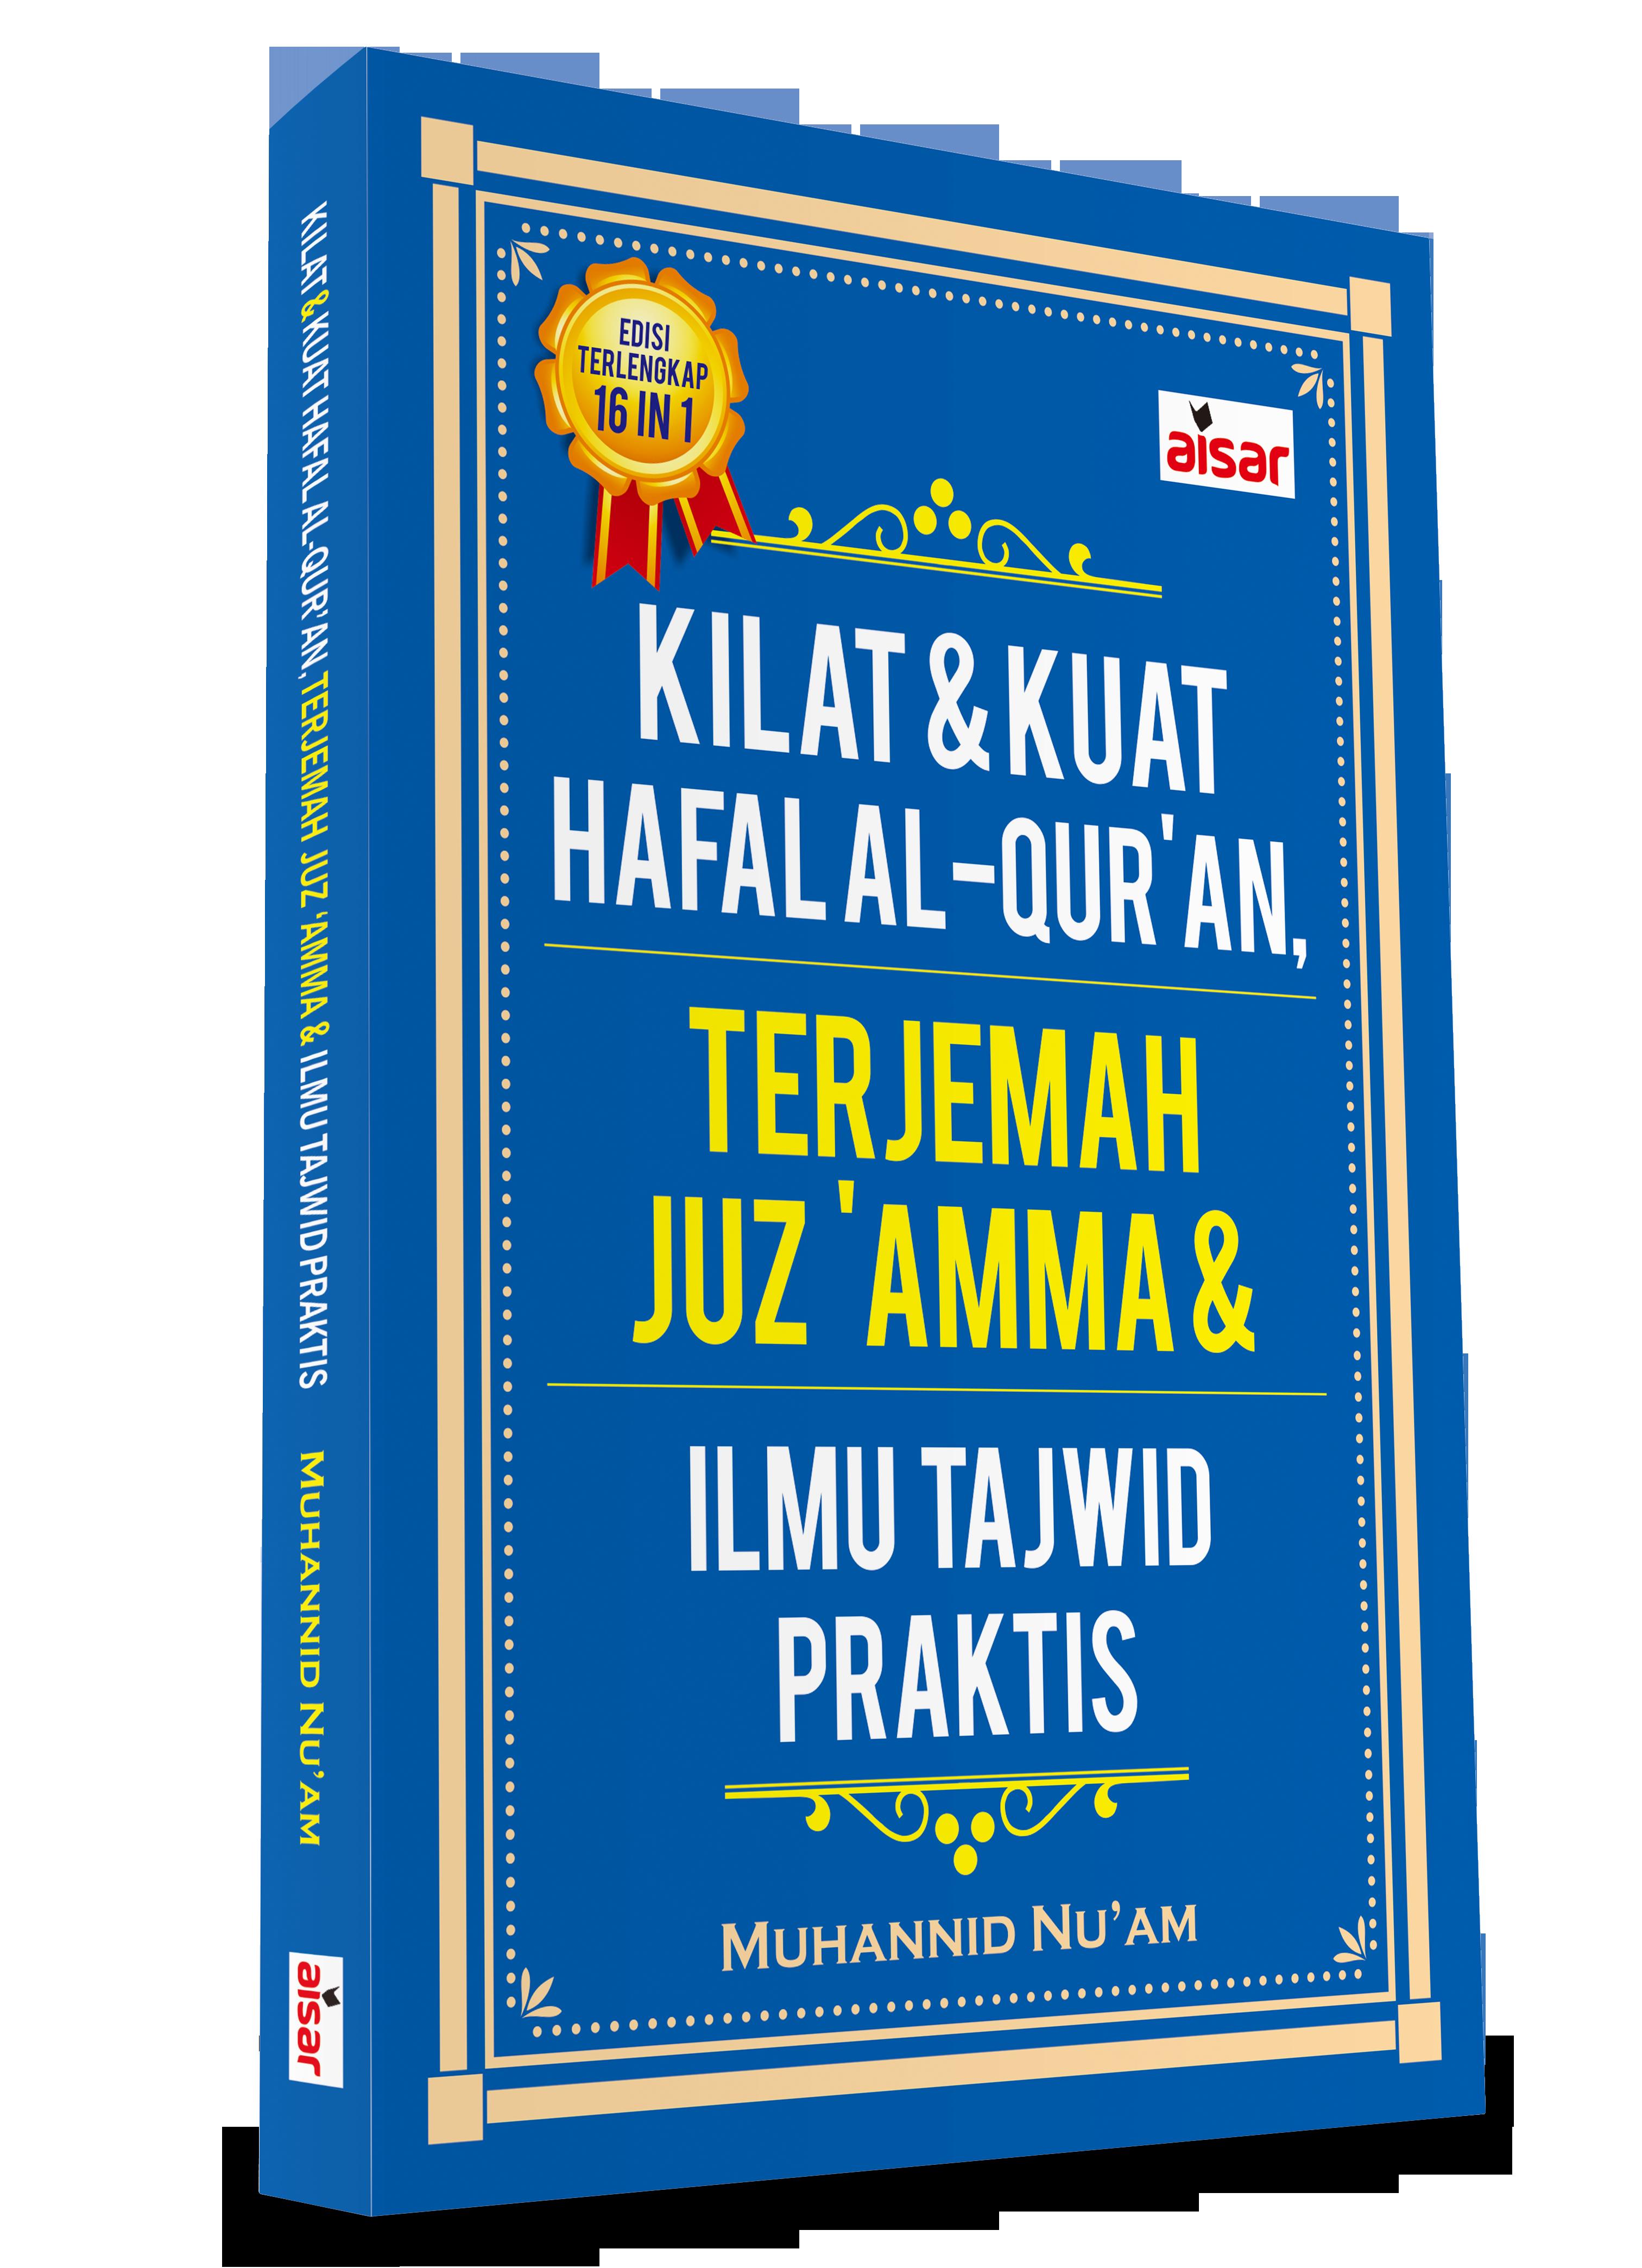 Jual Buku Kilat & Kuat Hafal Al-Qur'an, Terjemahan Juz Amma & Ilmu Tajwid Praktis